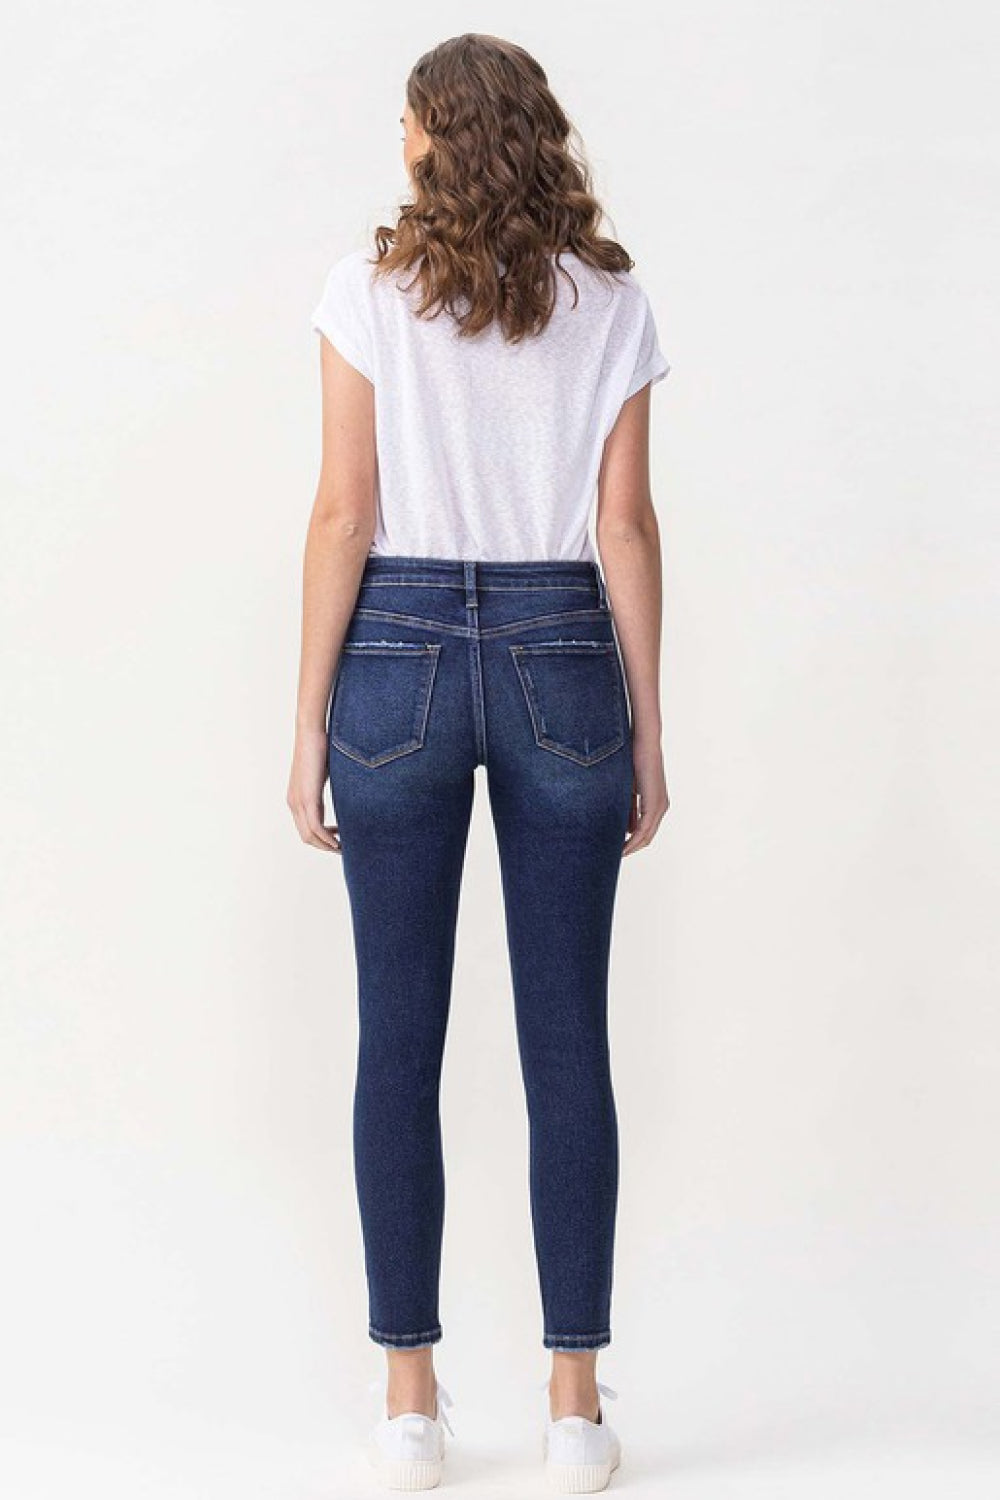 Lovervet Full Size Chelsea Midrise Crop Skinny Jeans - Make'm Blush Boutique 